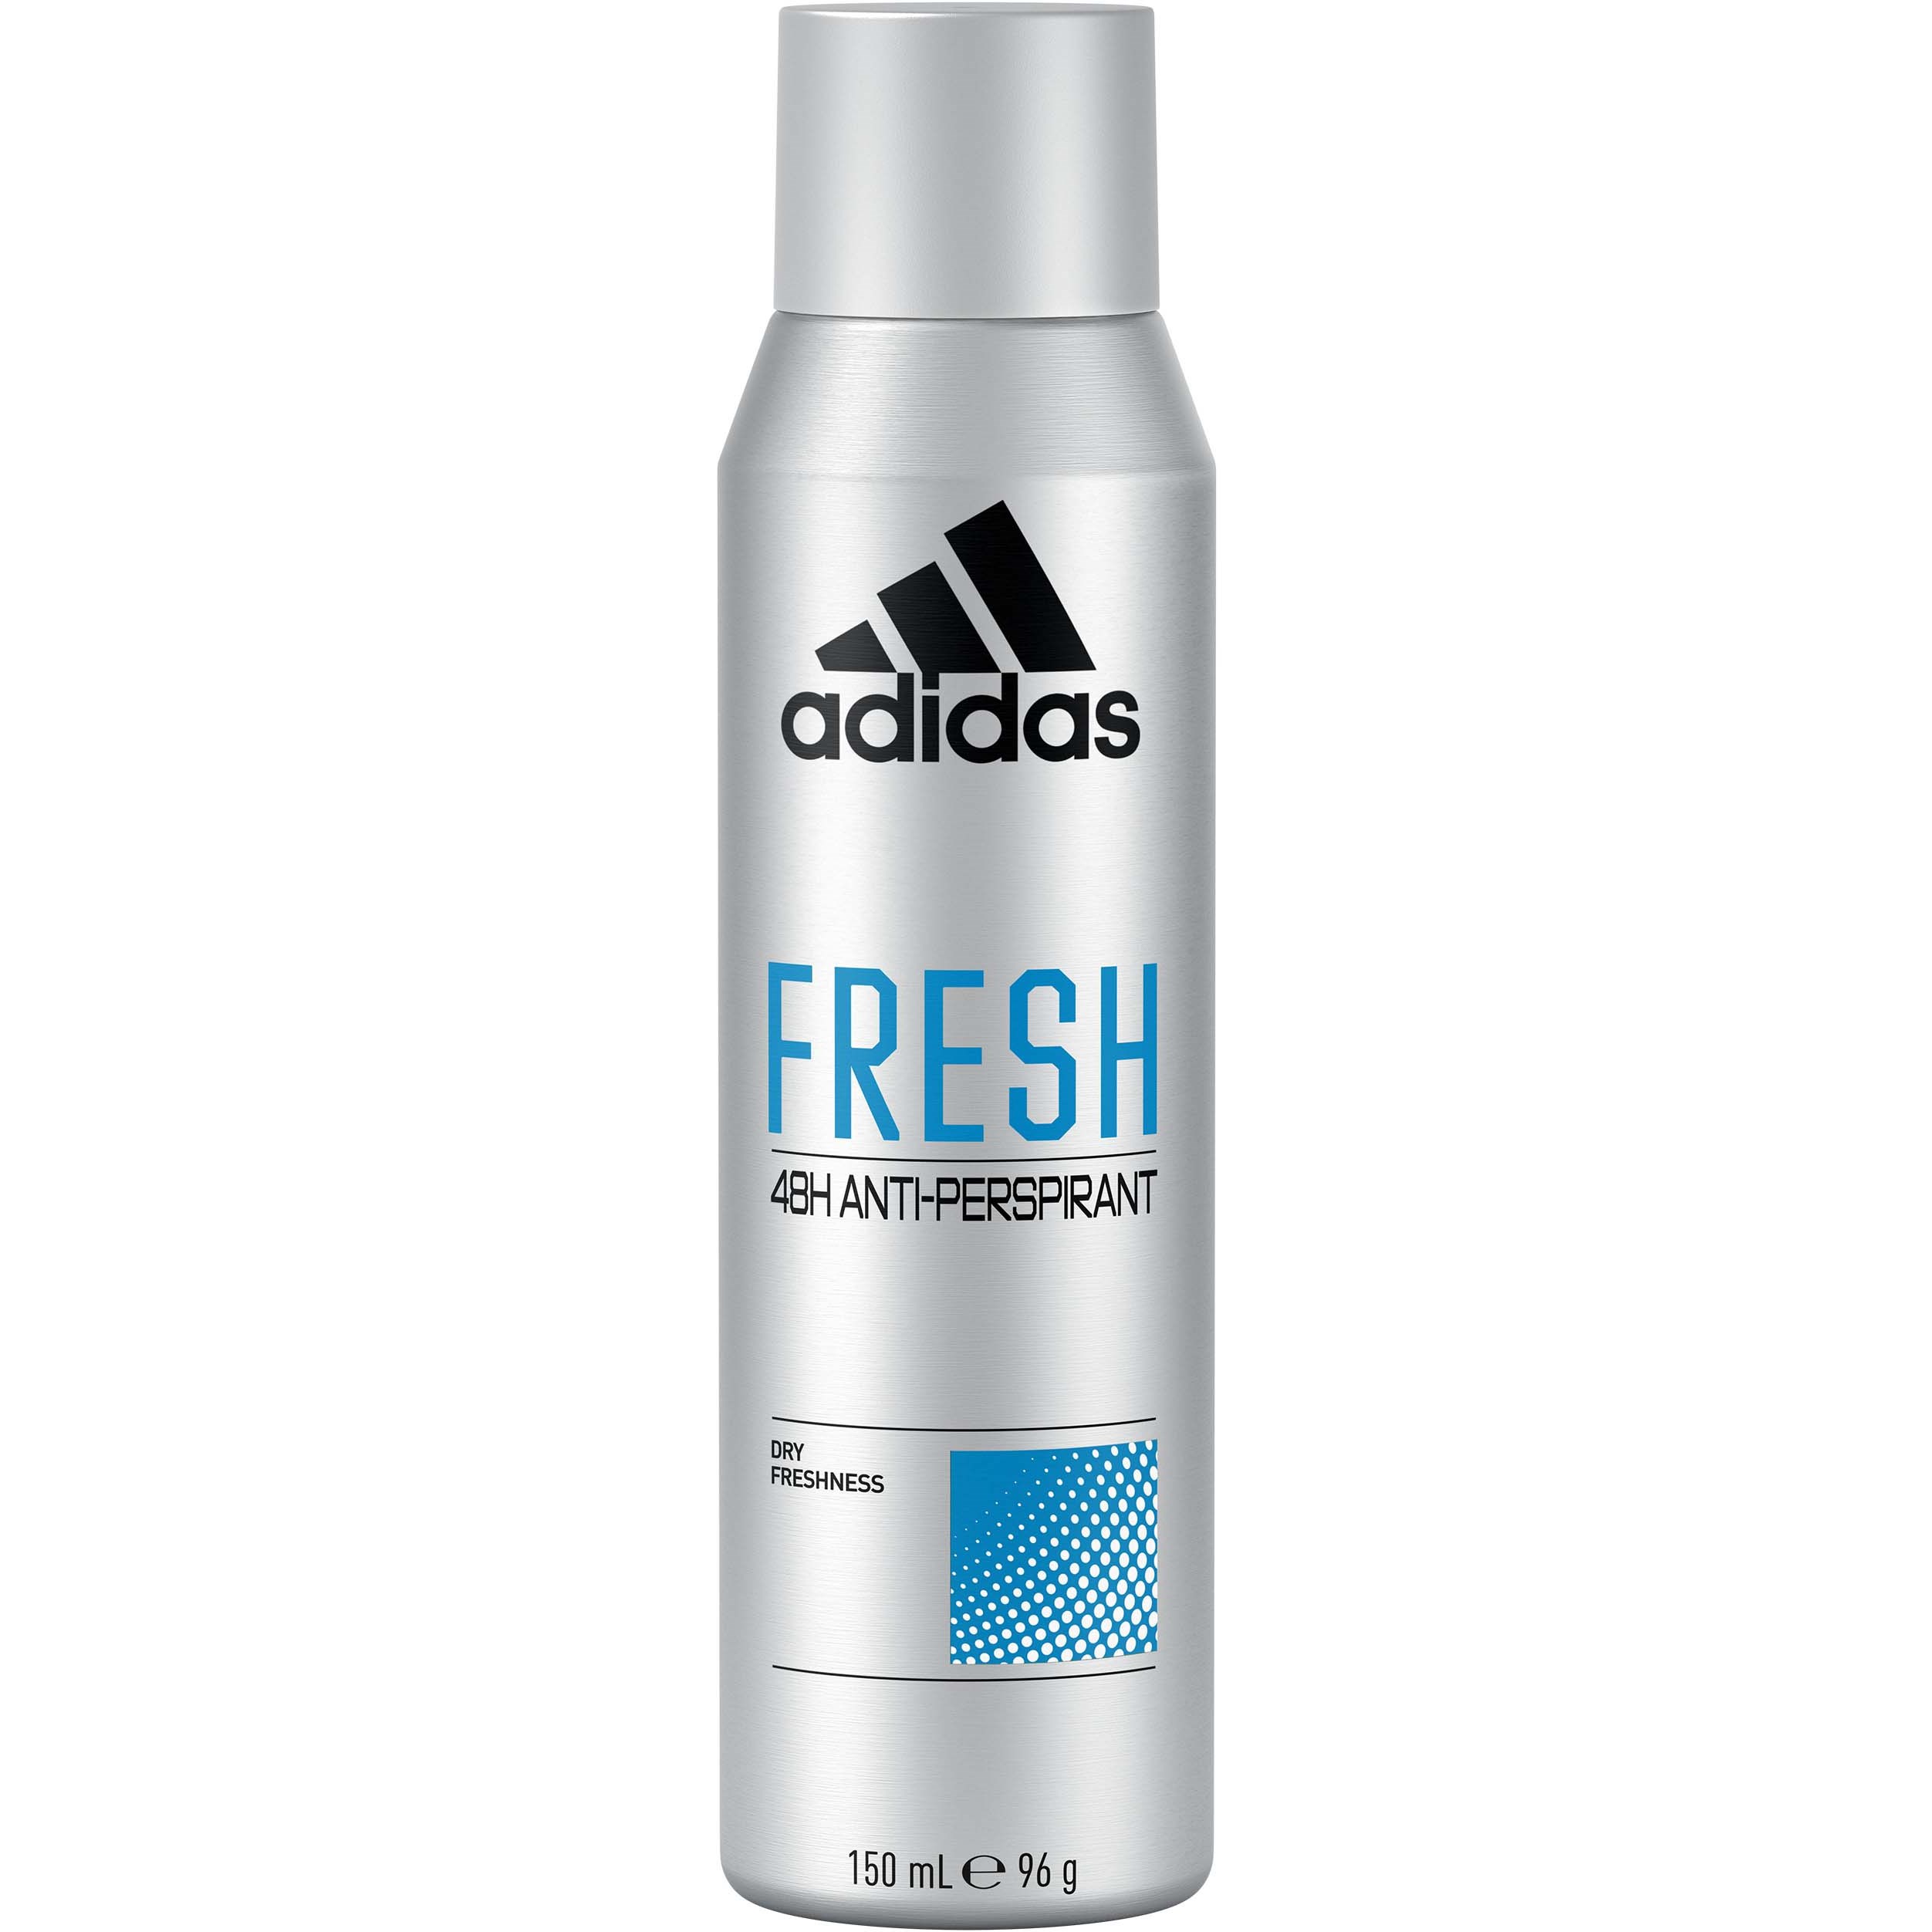 Zdjęcia - Dezodorant Adidas Fresh 48H Anti-Perspirant 150 ml 